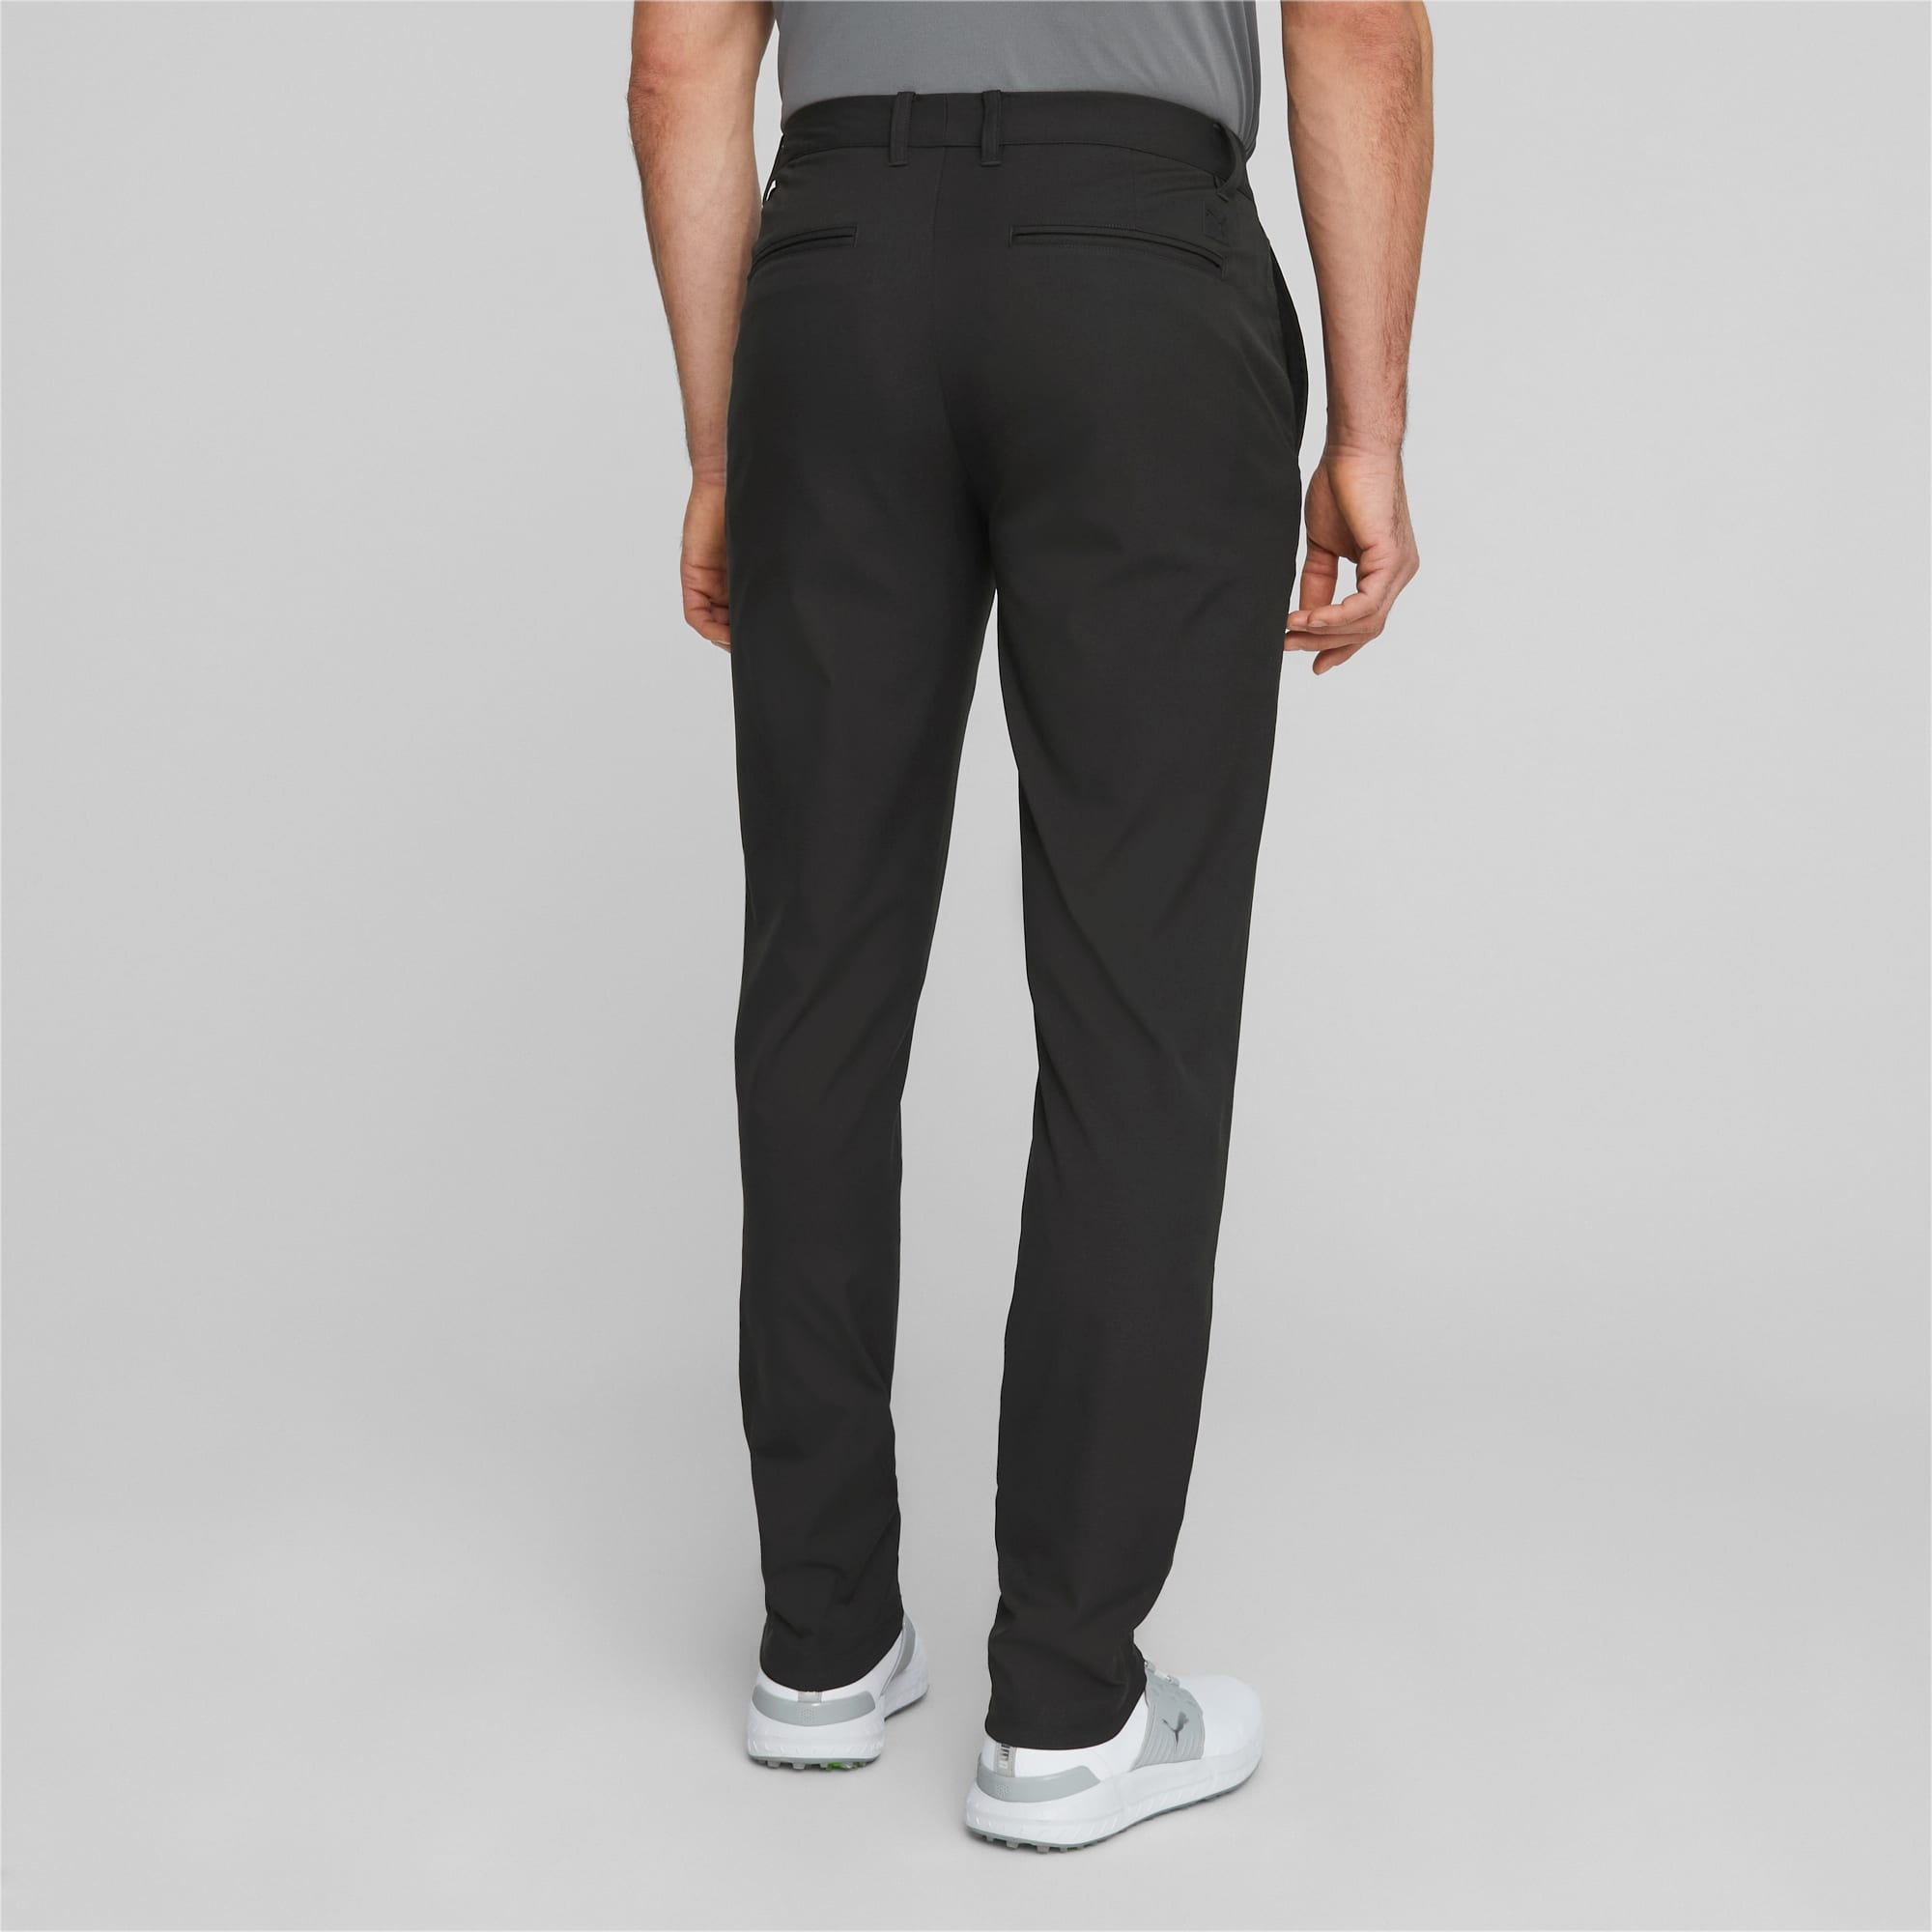 PUMA Dealer Tailored Golf Pants Men, Black, Size 32/36, Clothing